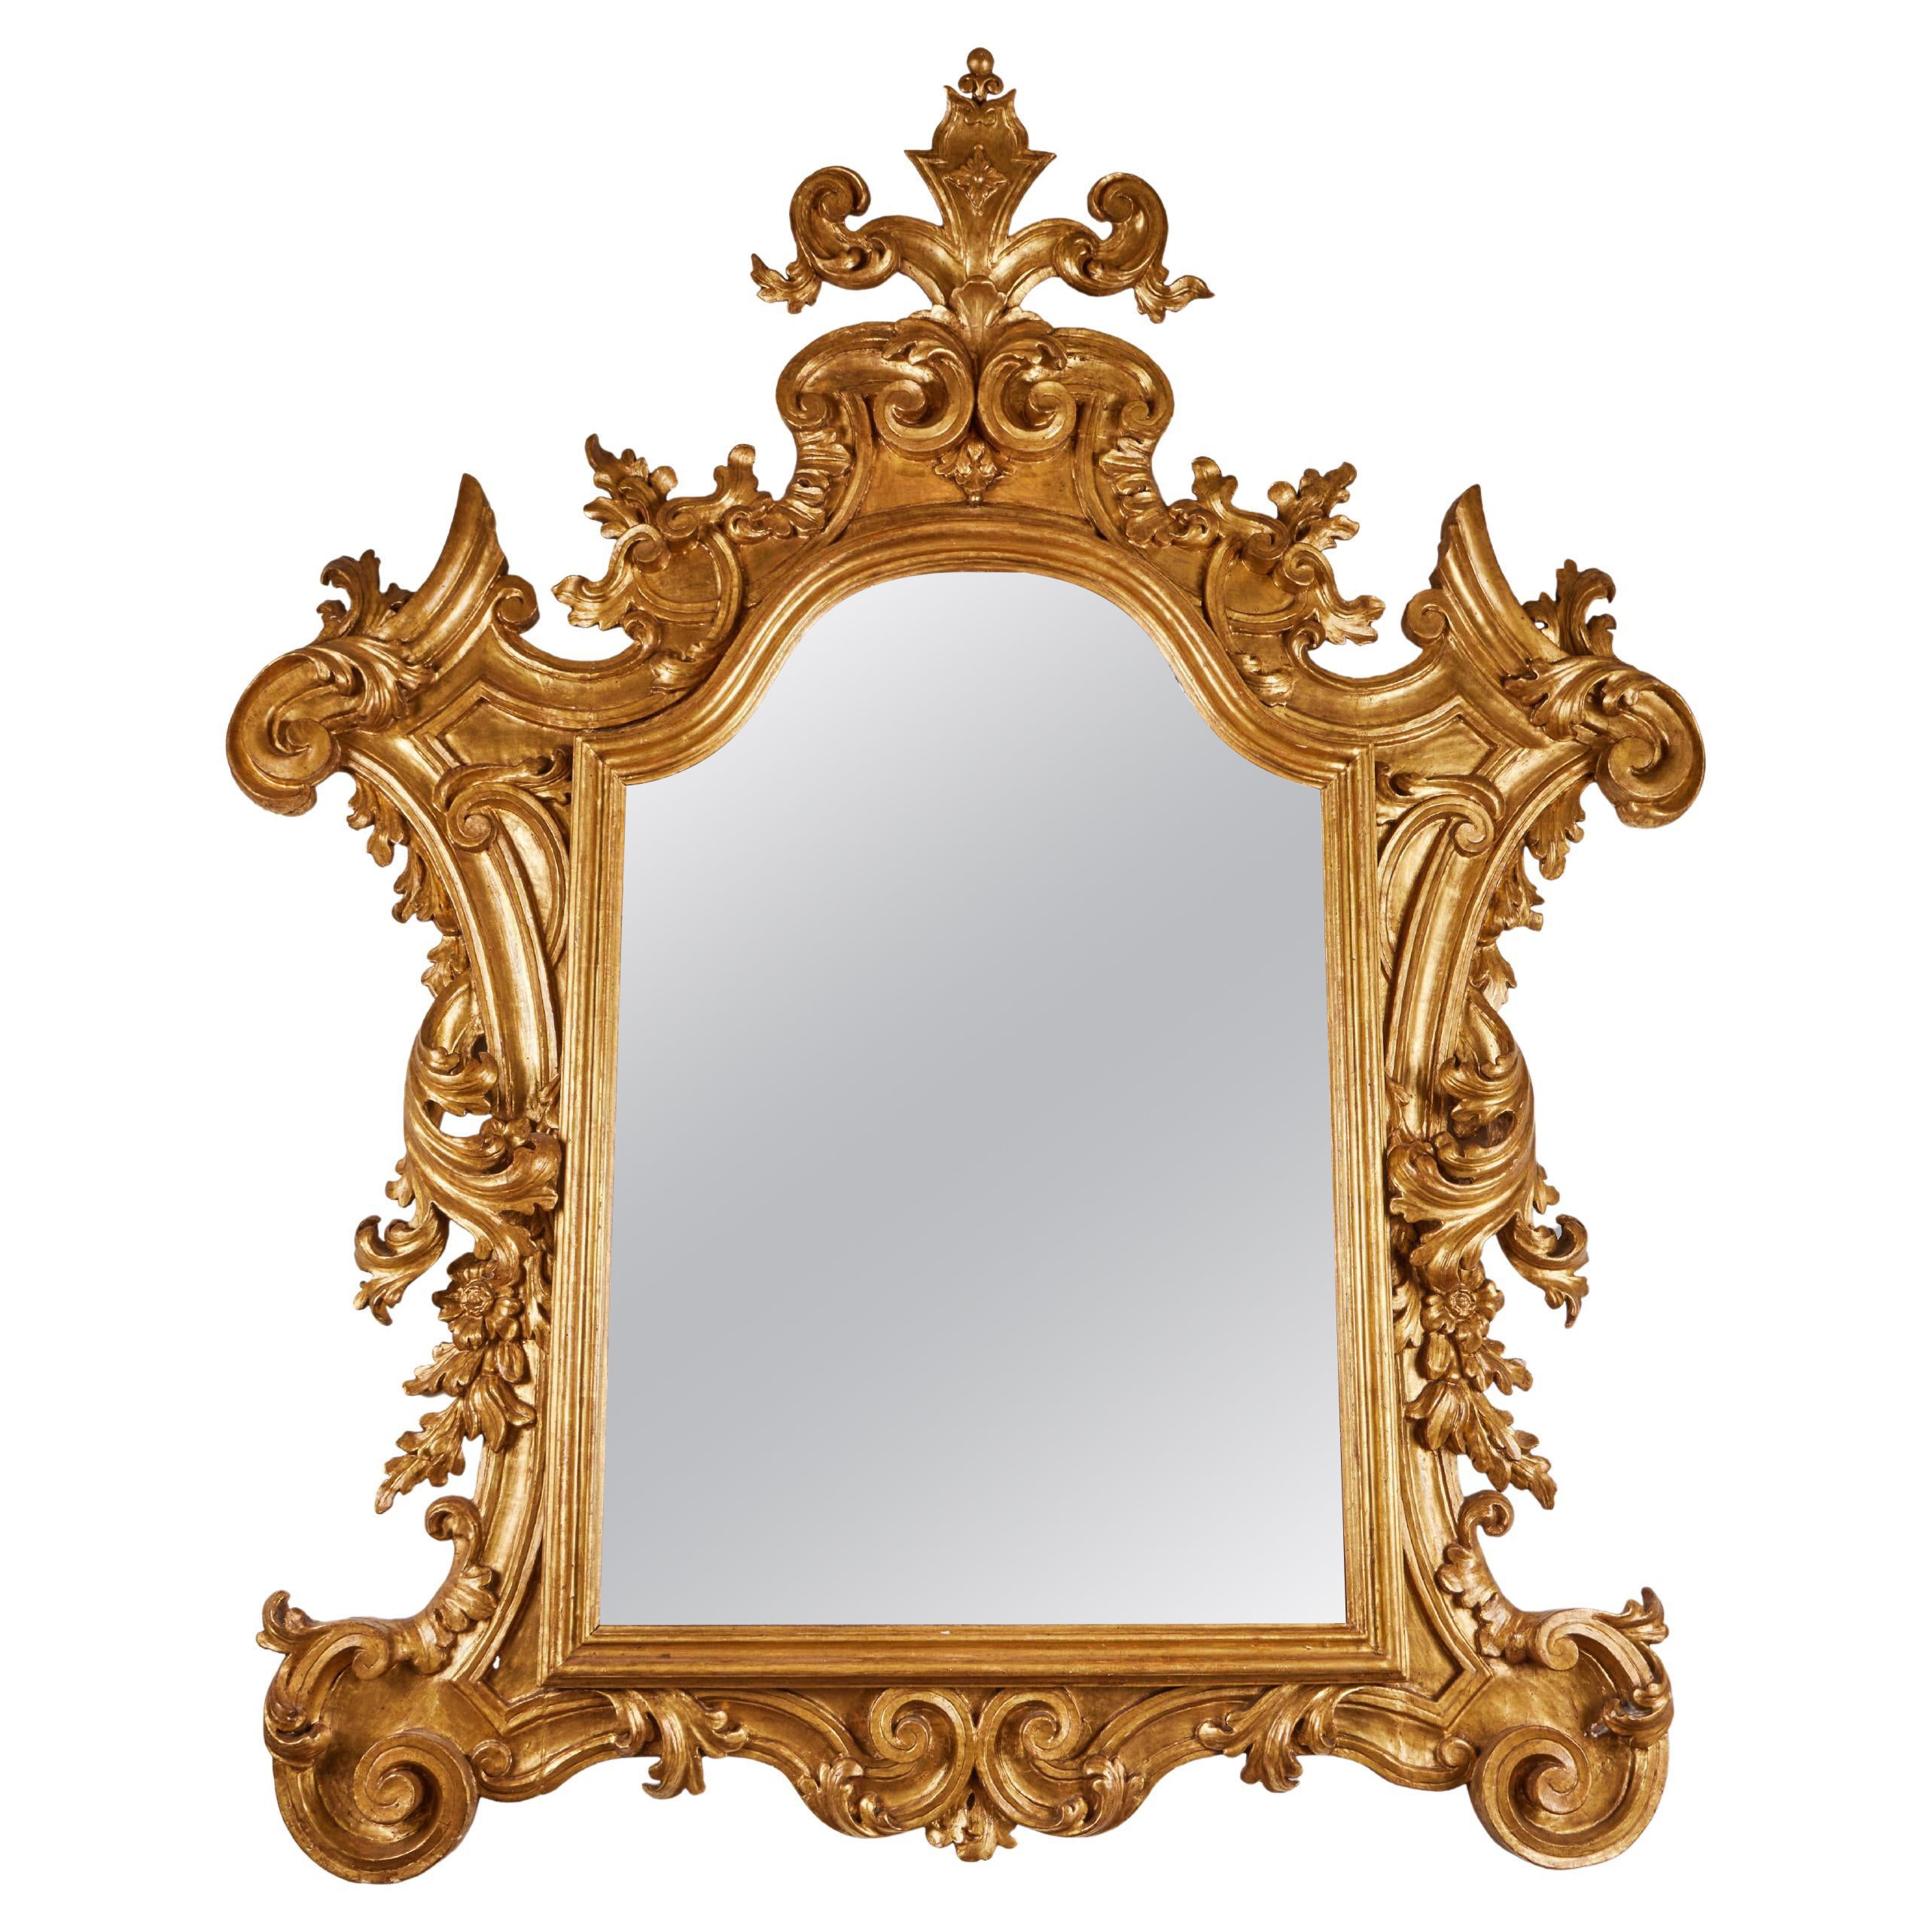 antique-segmented-venetian-mirror-19th-century-at-1stdibs